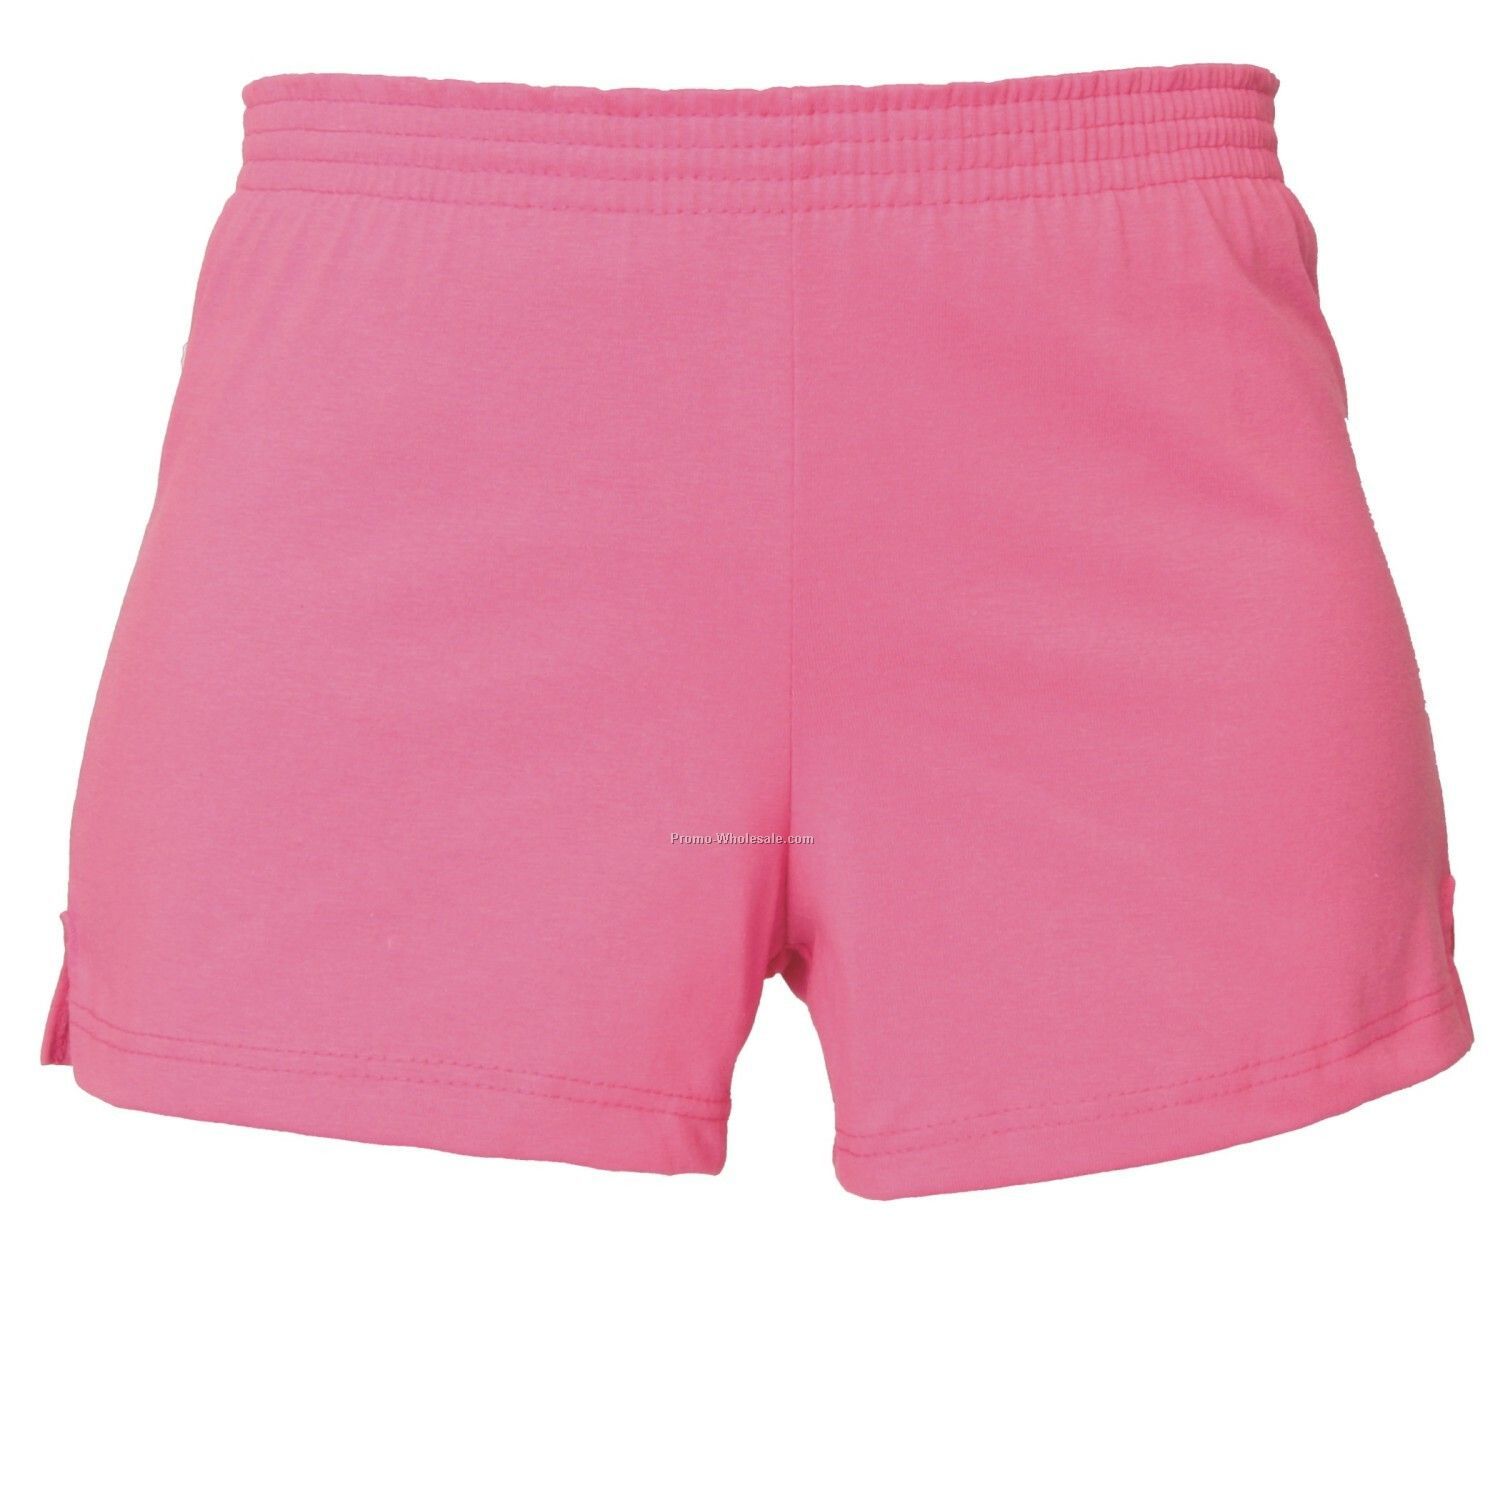 Adults' Pink Spirit Shorts (Xs-xl)